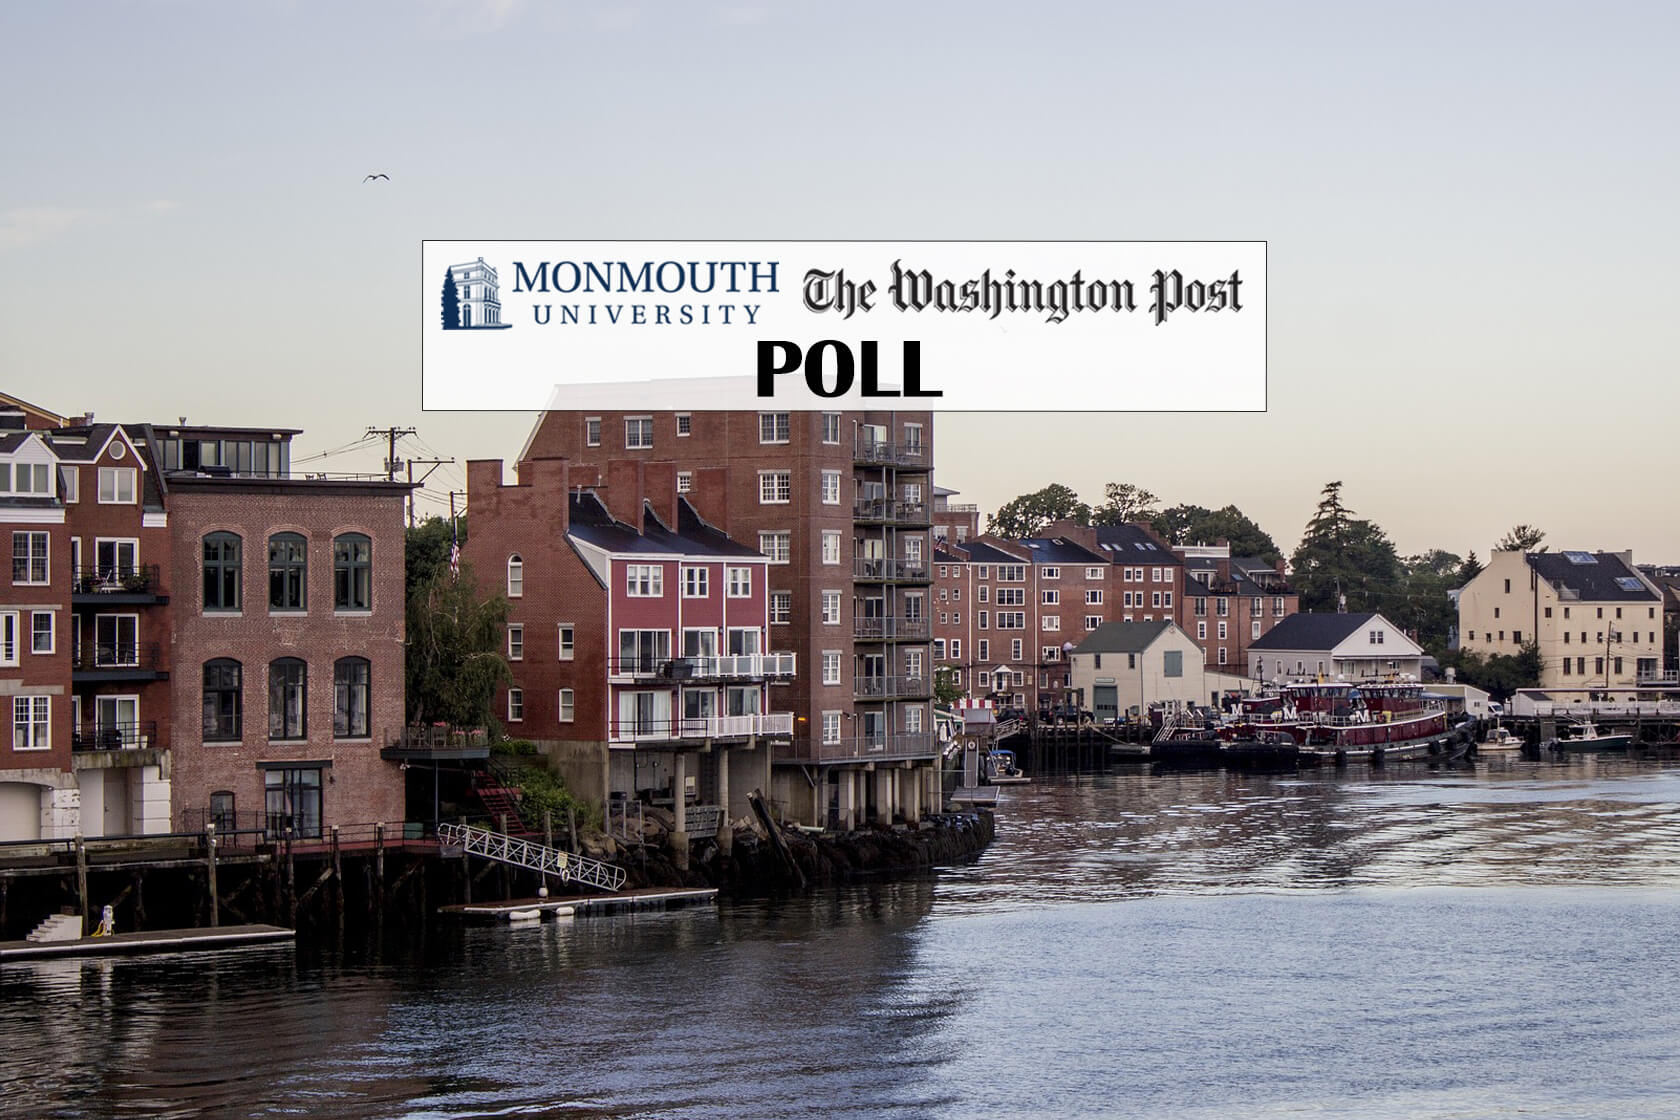 Image of New Hampshire town with Monmouth University logo and Washington Post logo